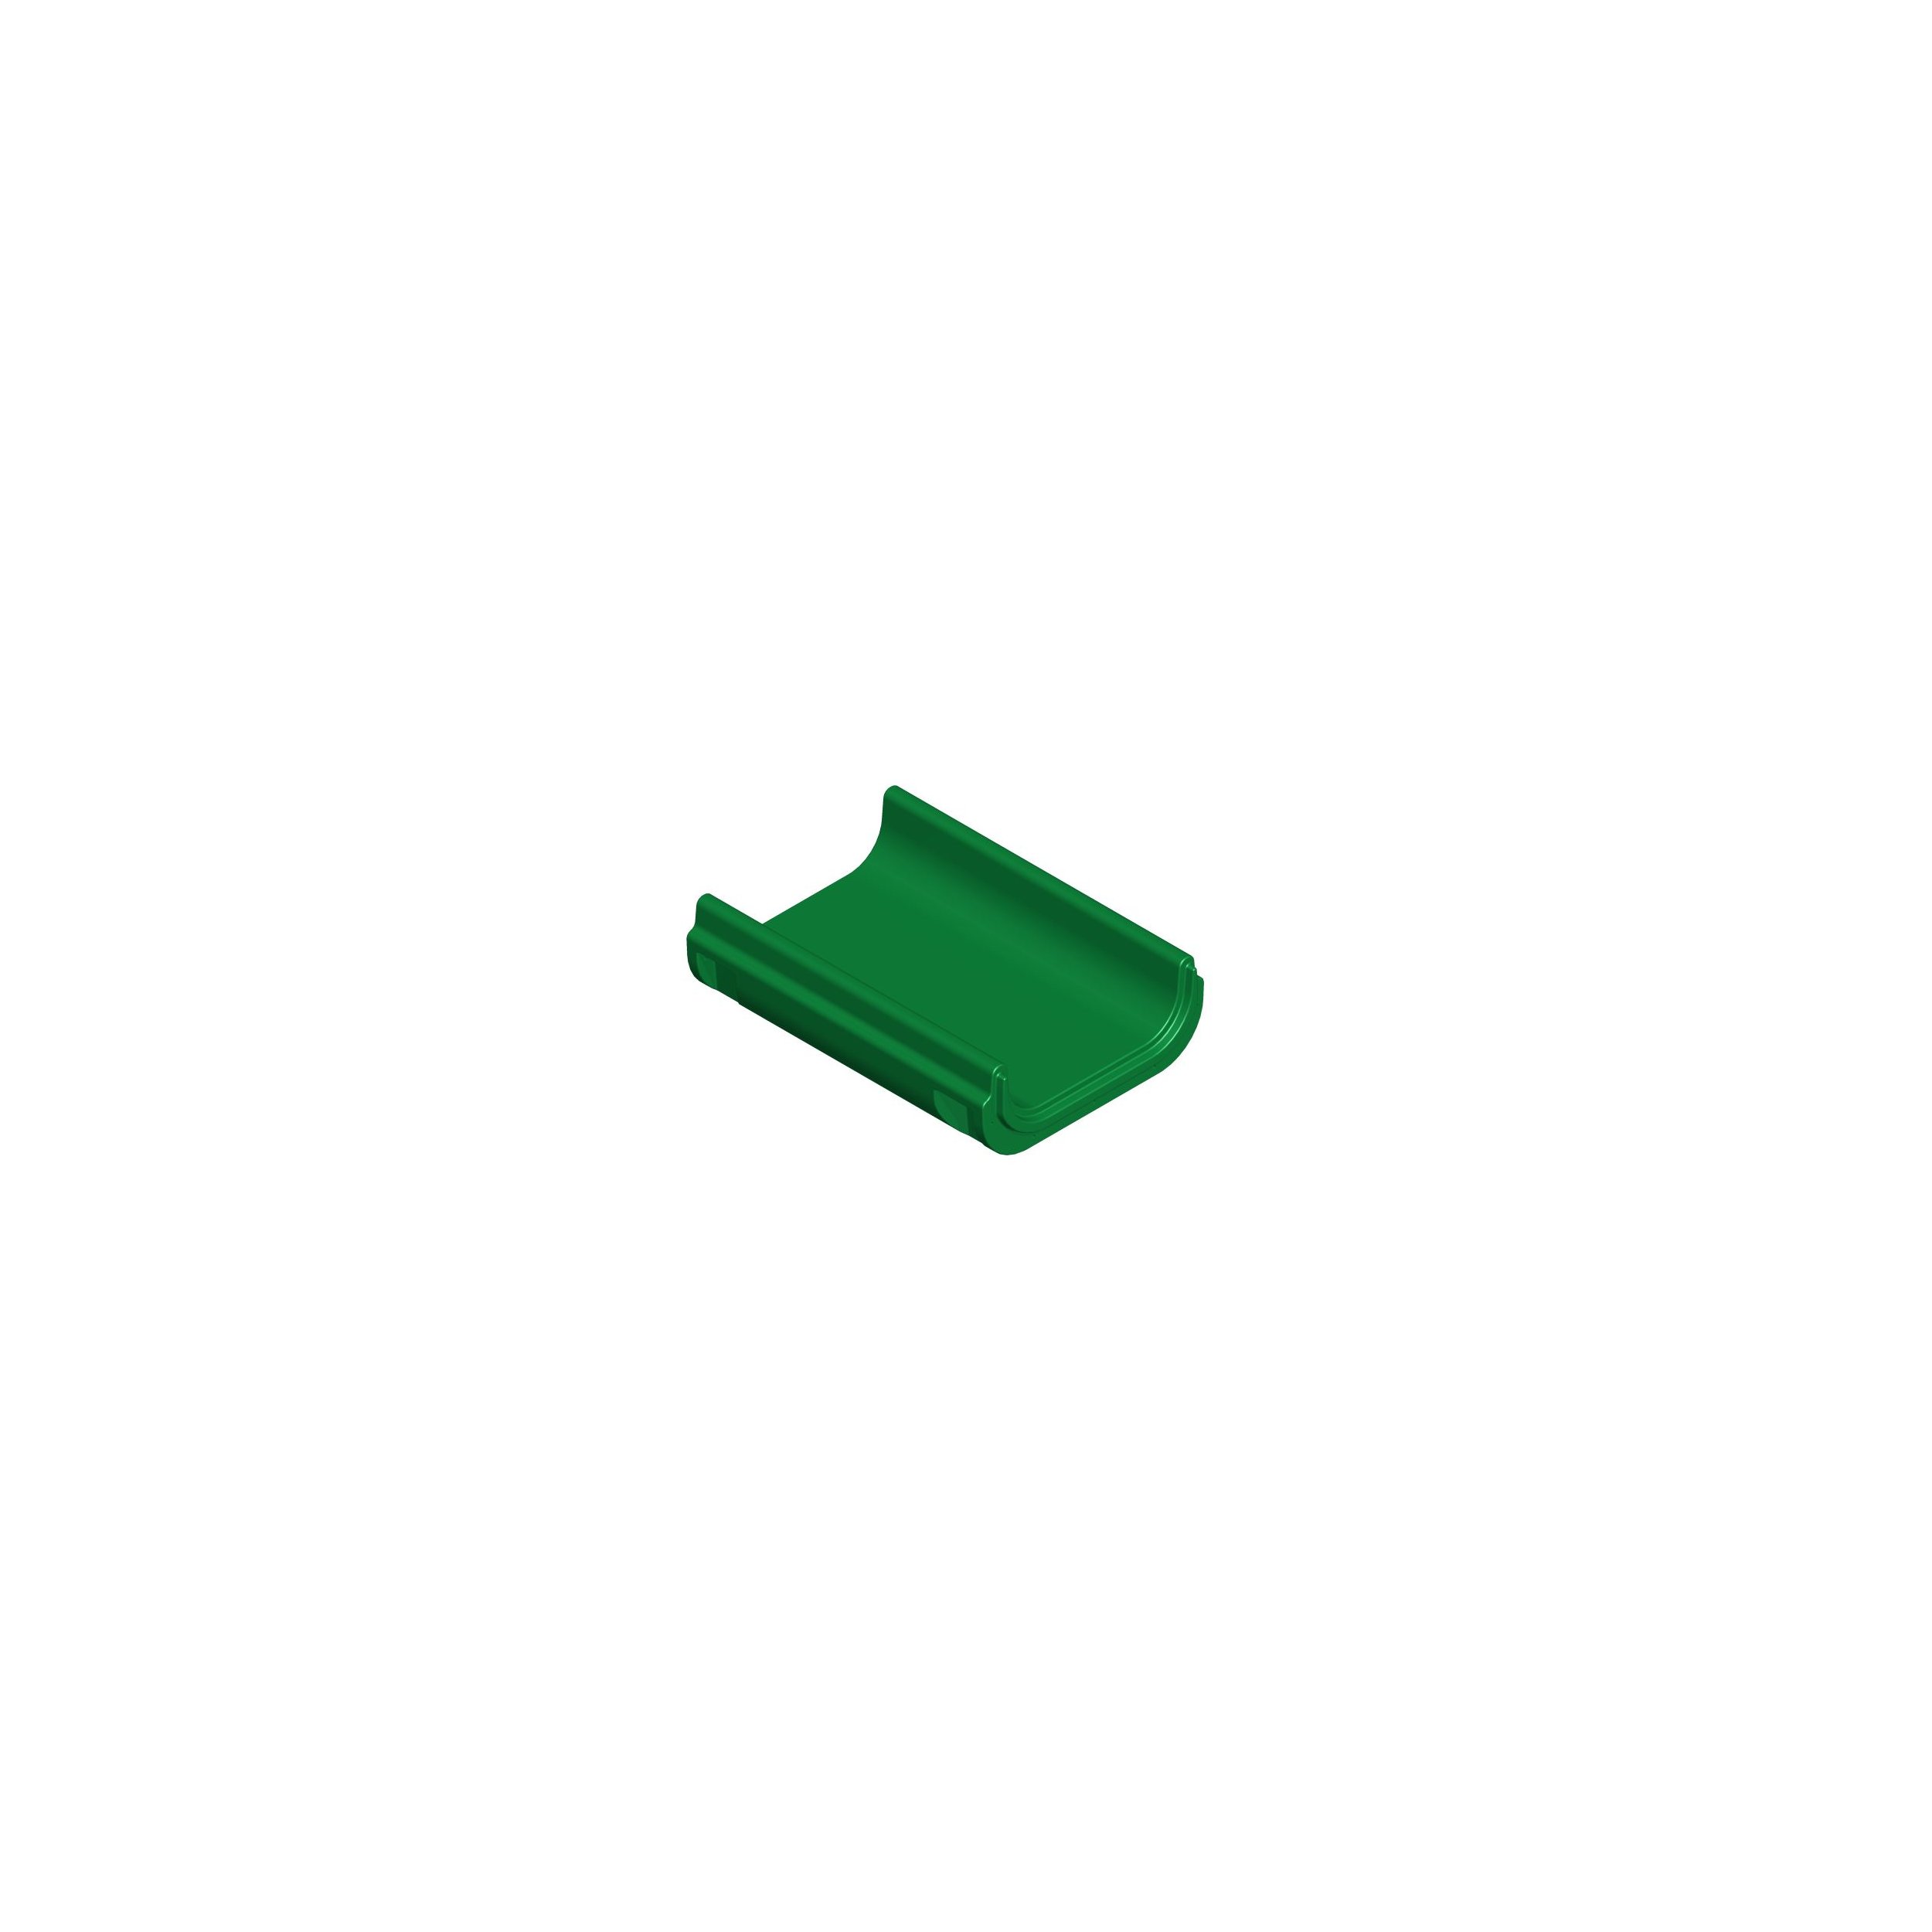 Module slide part C middle section - length 106 cm green